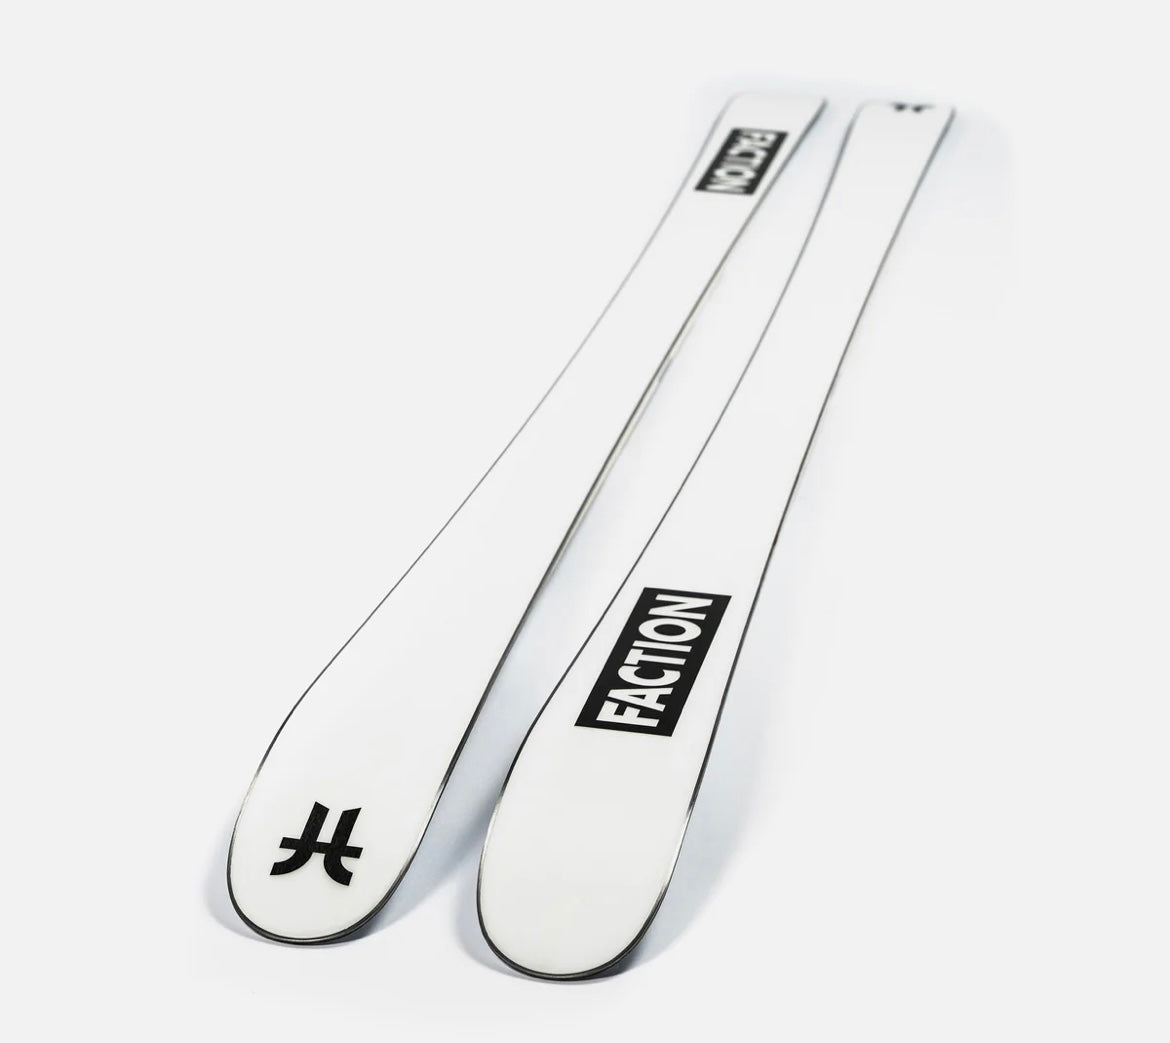 Faction Le Mogul Pro Skis - OutCast series